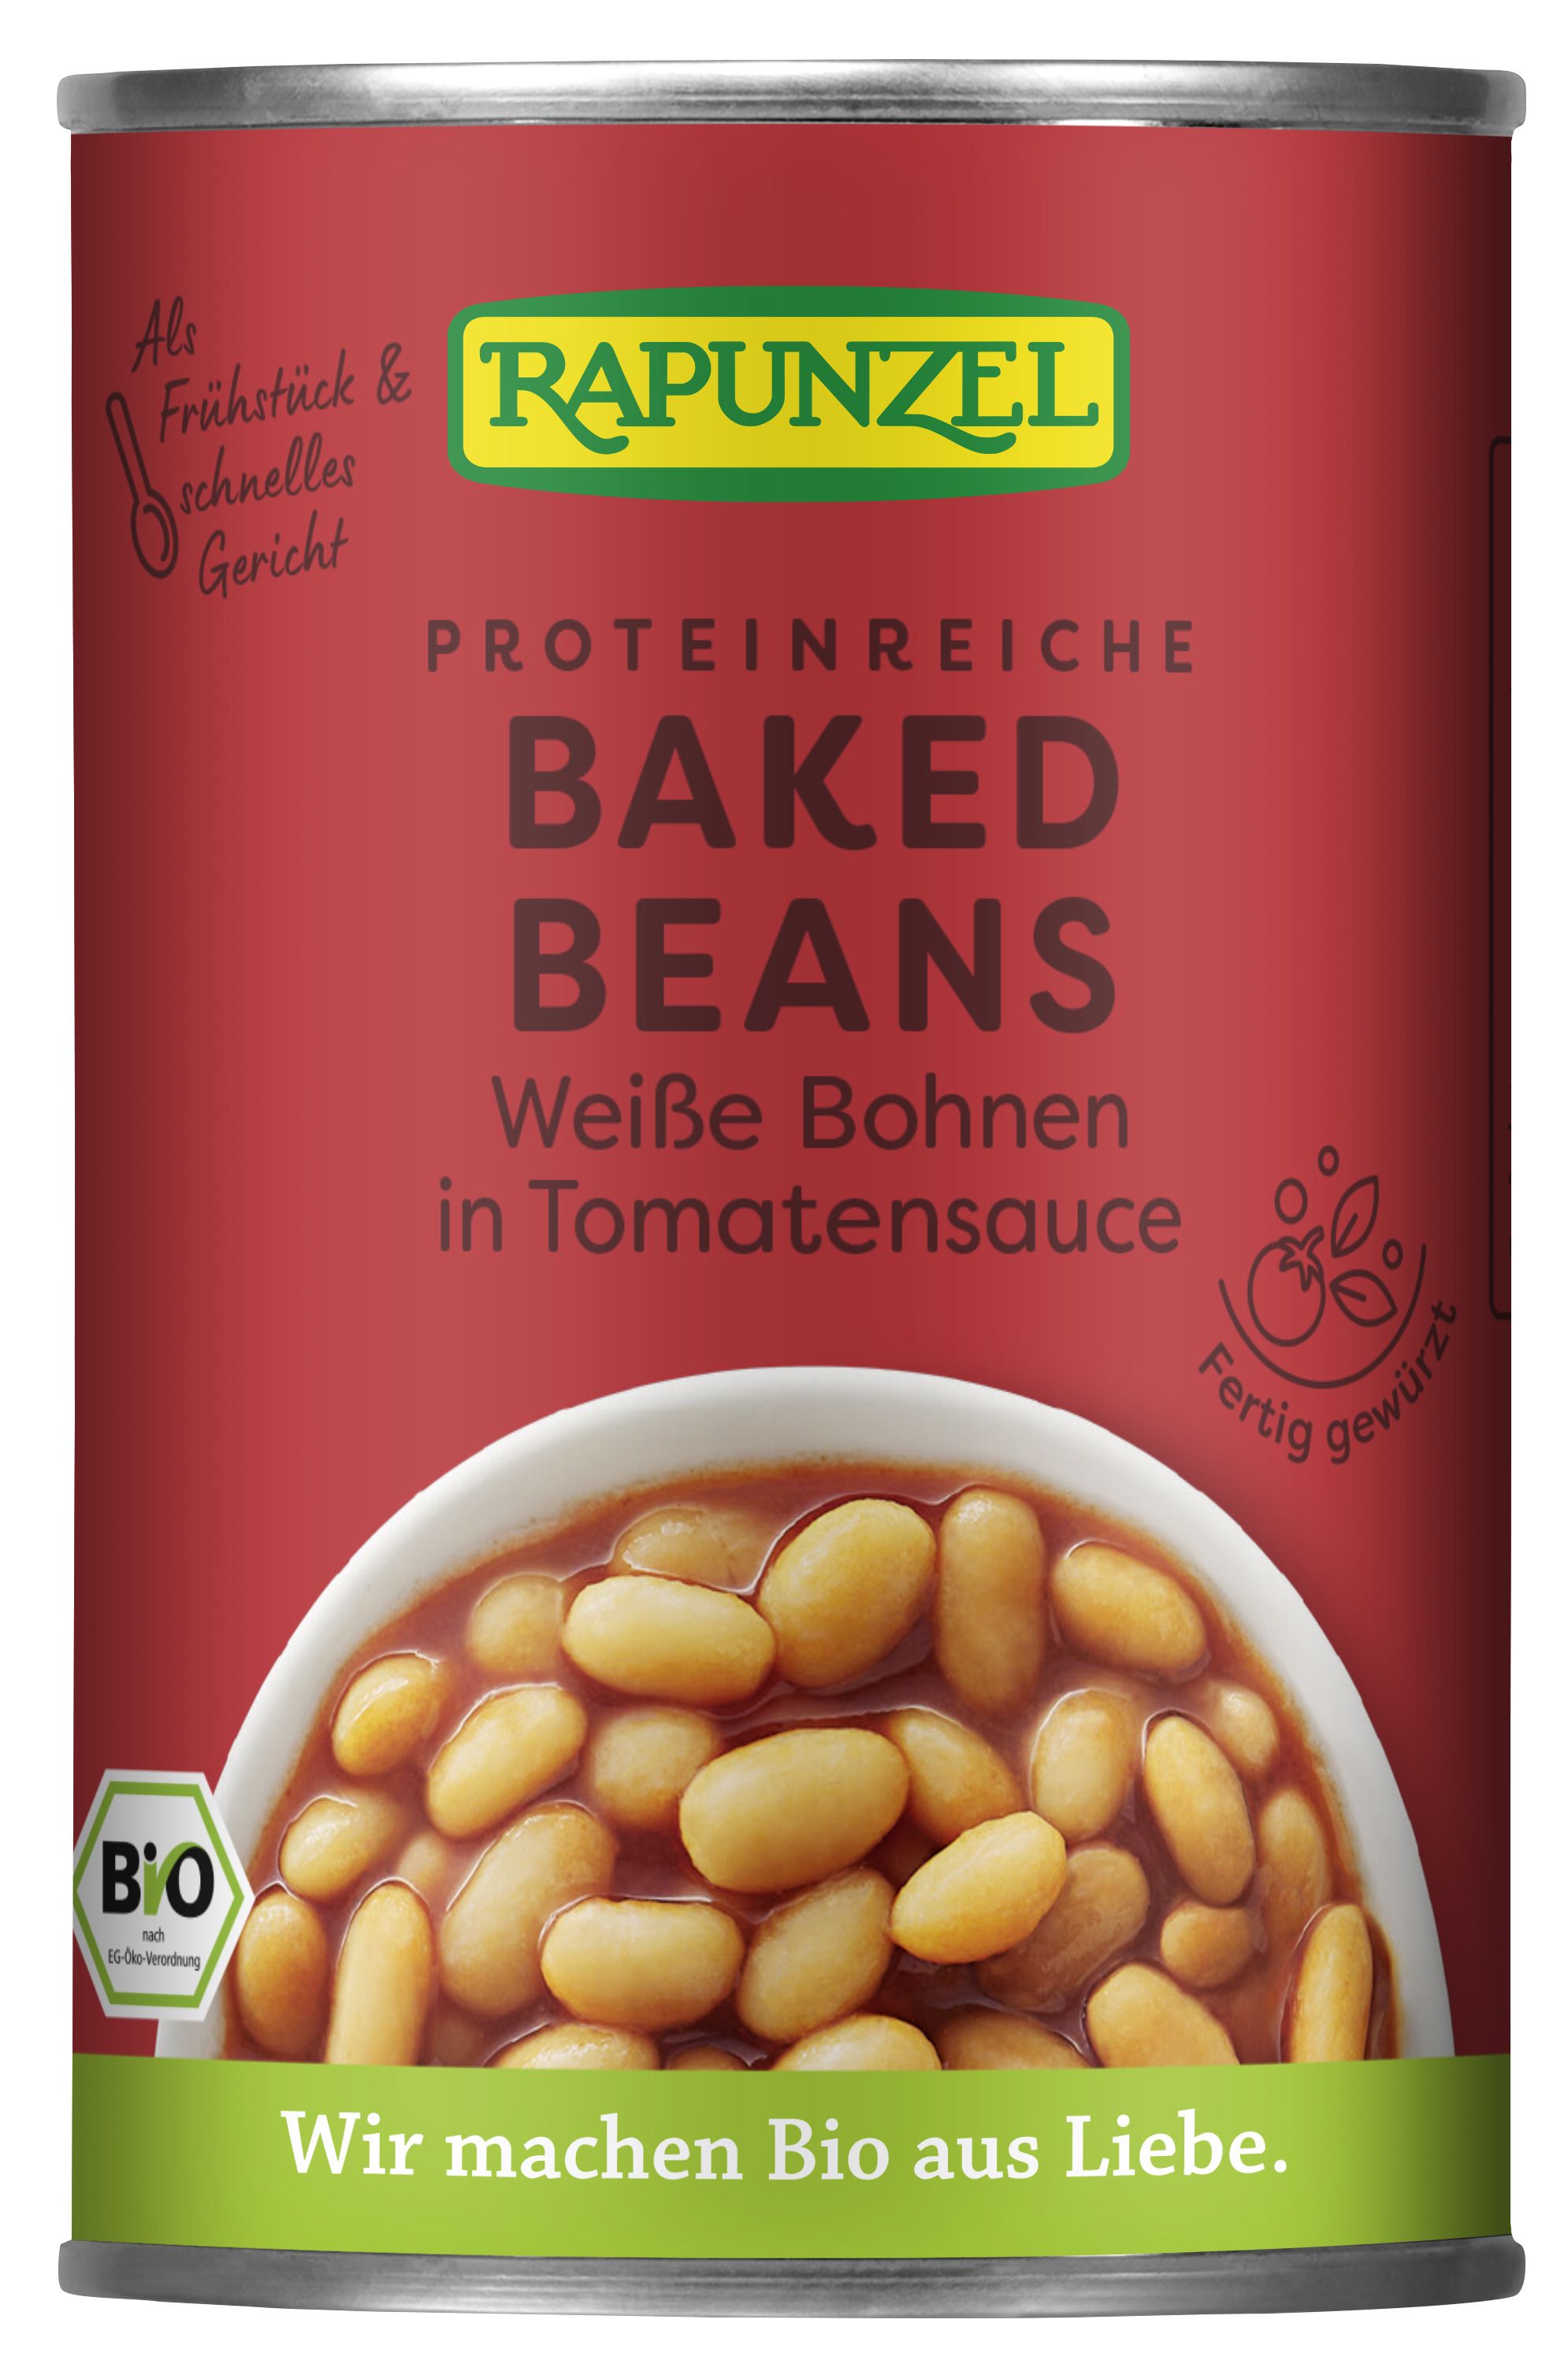 Rapunzel - Baked Beans, weiße Bohnen in Tomatensauce